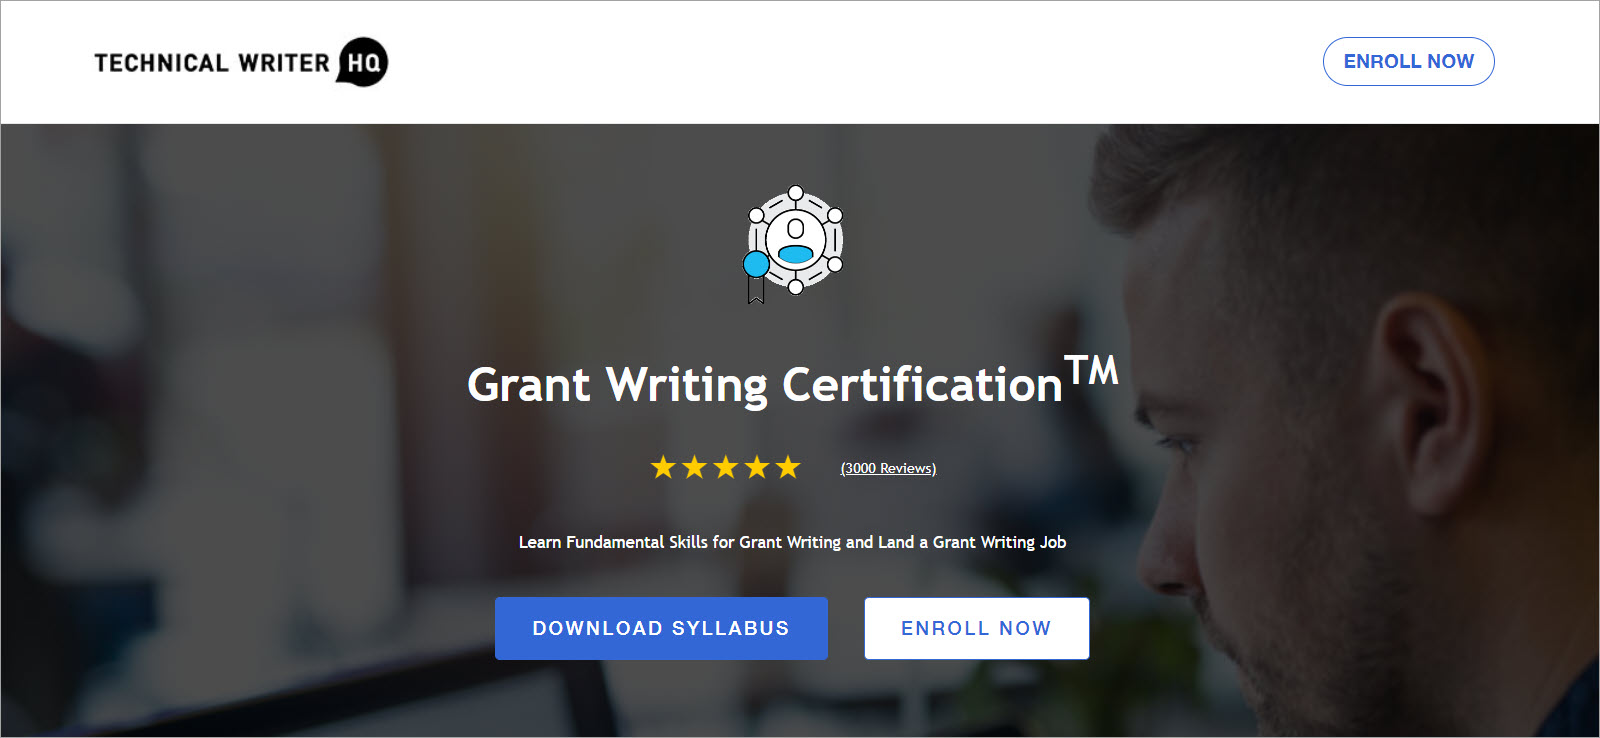 TWHQ Grant Writing Certificate